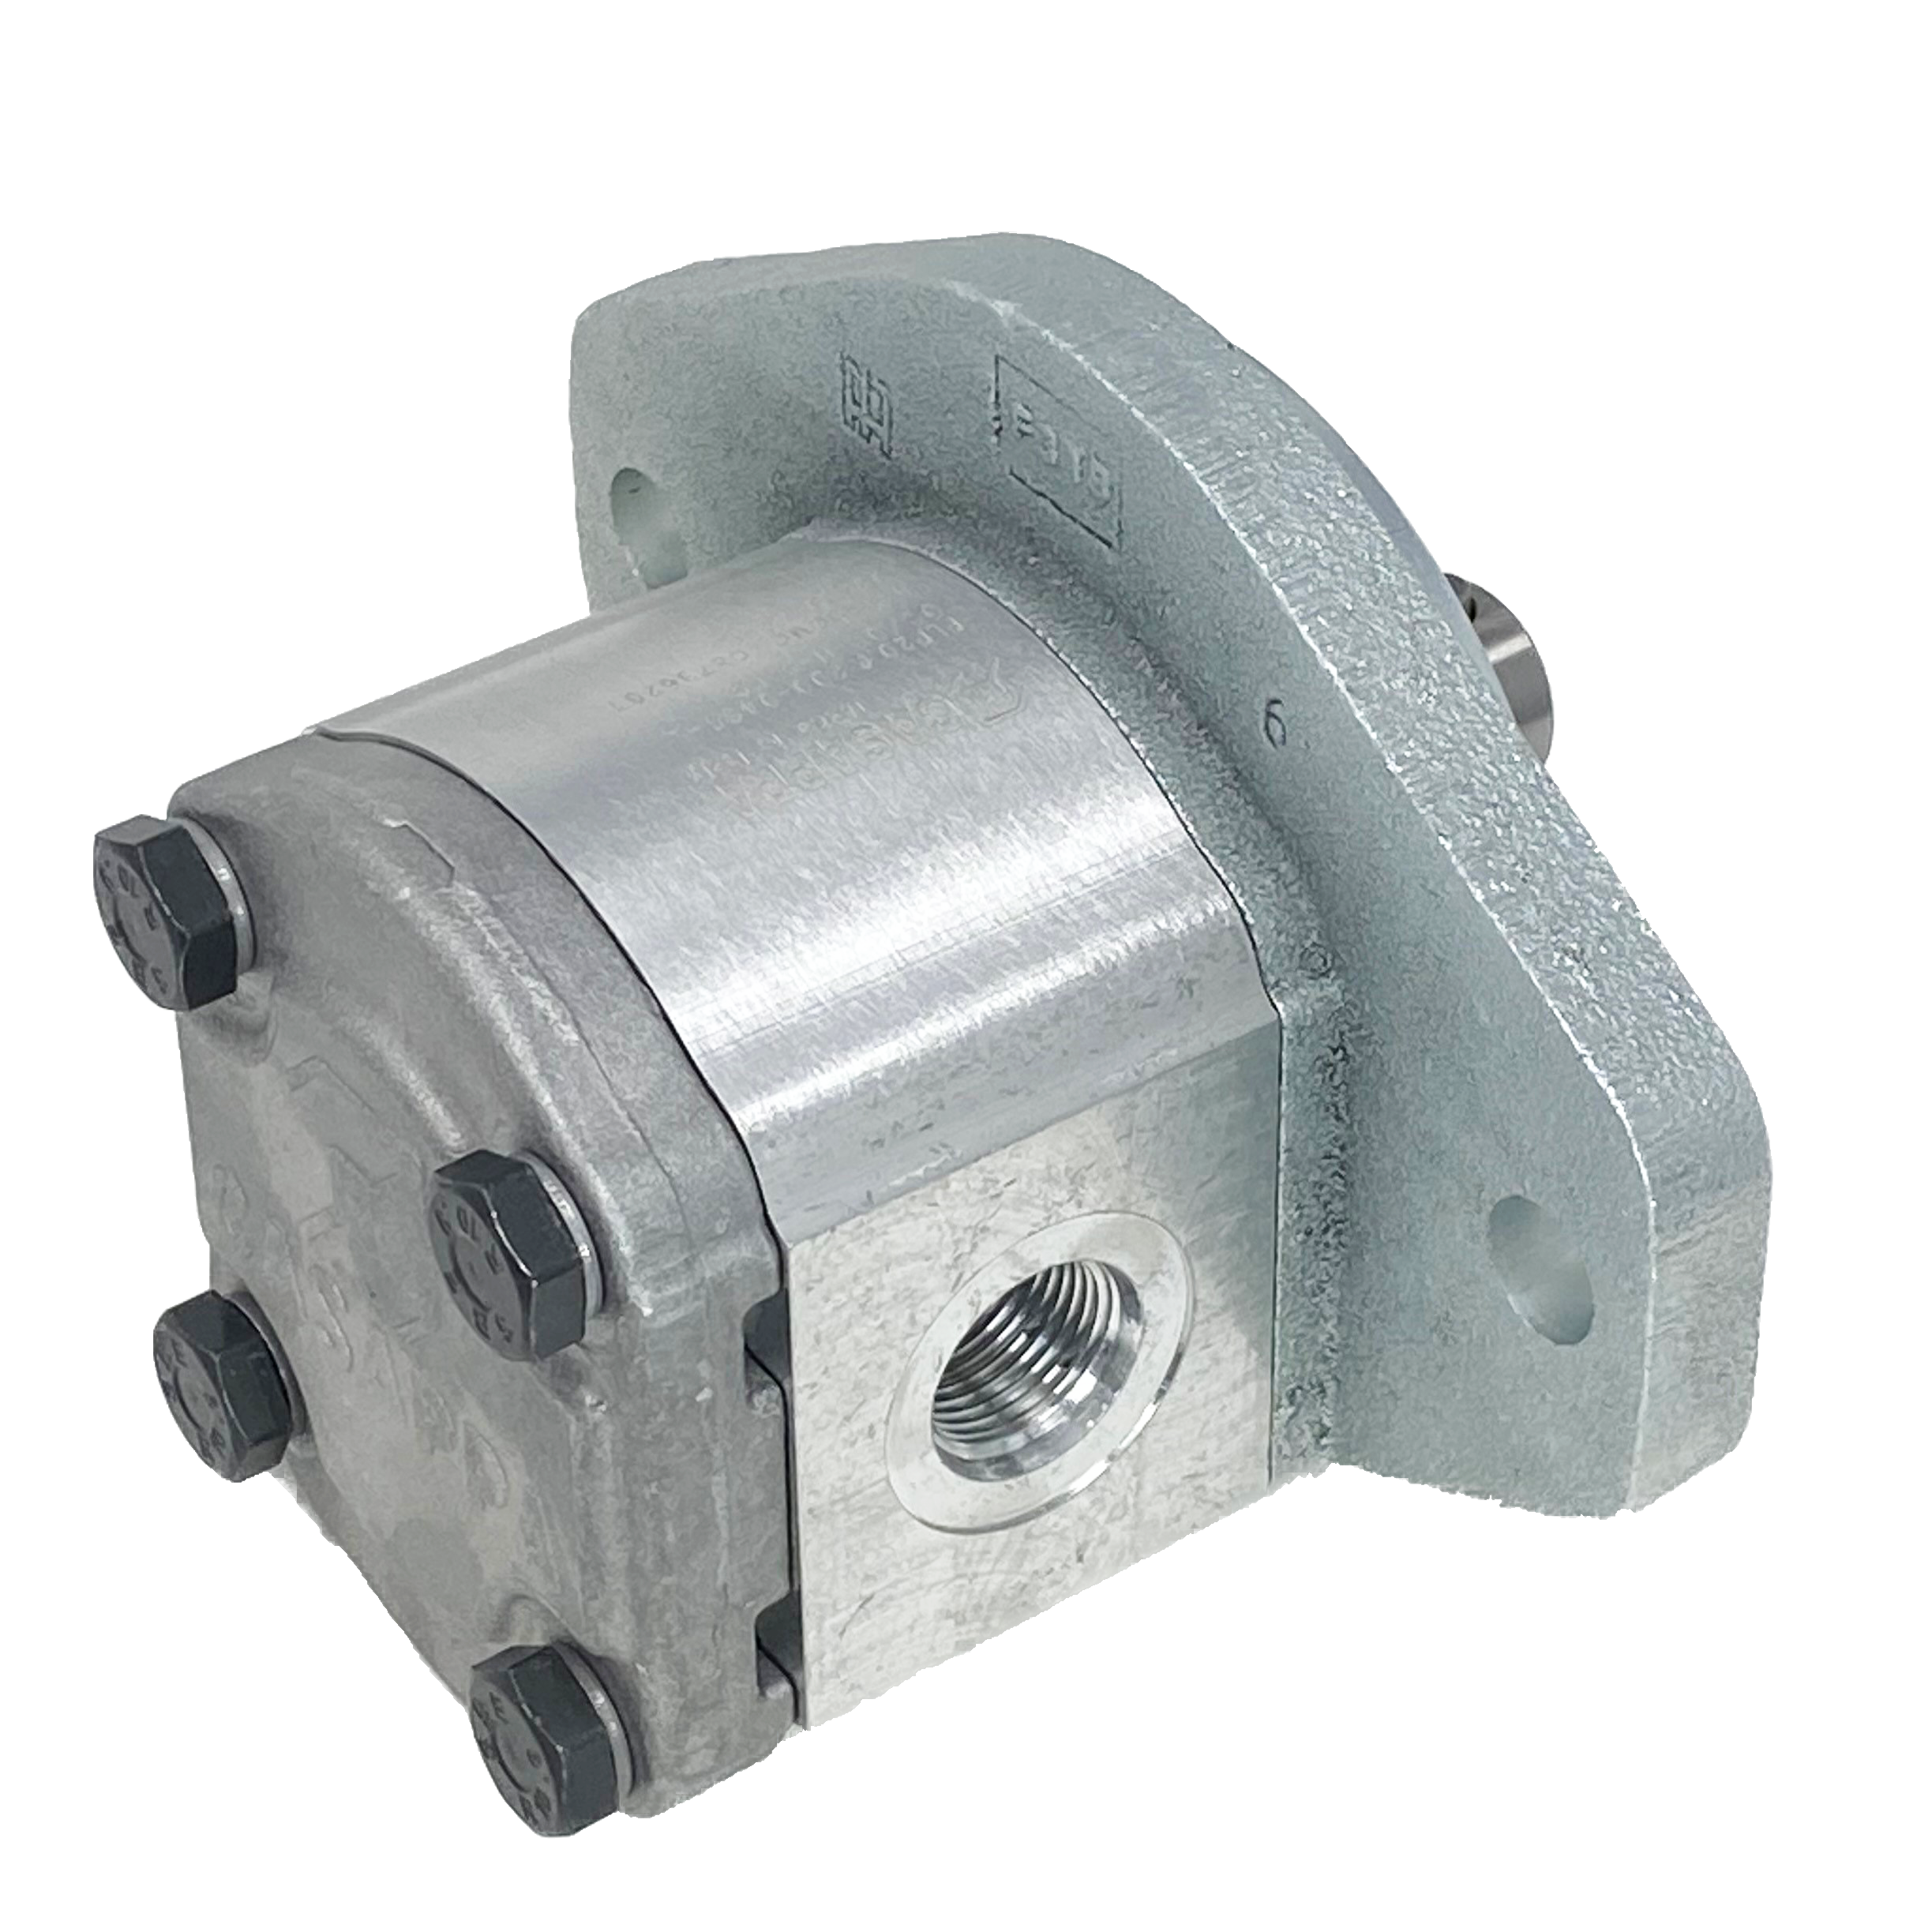 PLM20.8B0-31S1-LOC/OC-N-EL : Casappa Polaris Gear Motor, 8.26cc, 3625psi Rated, 3500RPM, Reversible Interior Drain, 5/8" Bore x 5/32" Key Shaft, SAE A 2-Bolt Flange, 0.625 (5/8") #10 SAE Inlet, 0.625 (5/8") #10 SAE Outlet, Aluminum Body & Flange